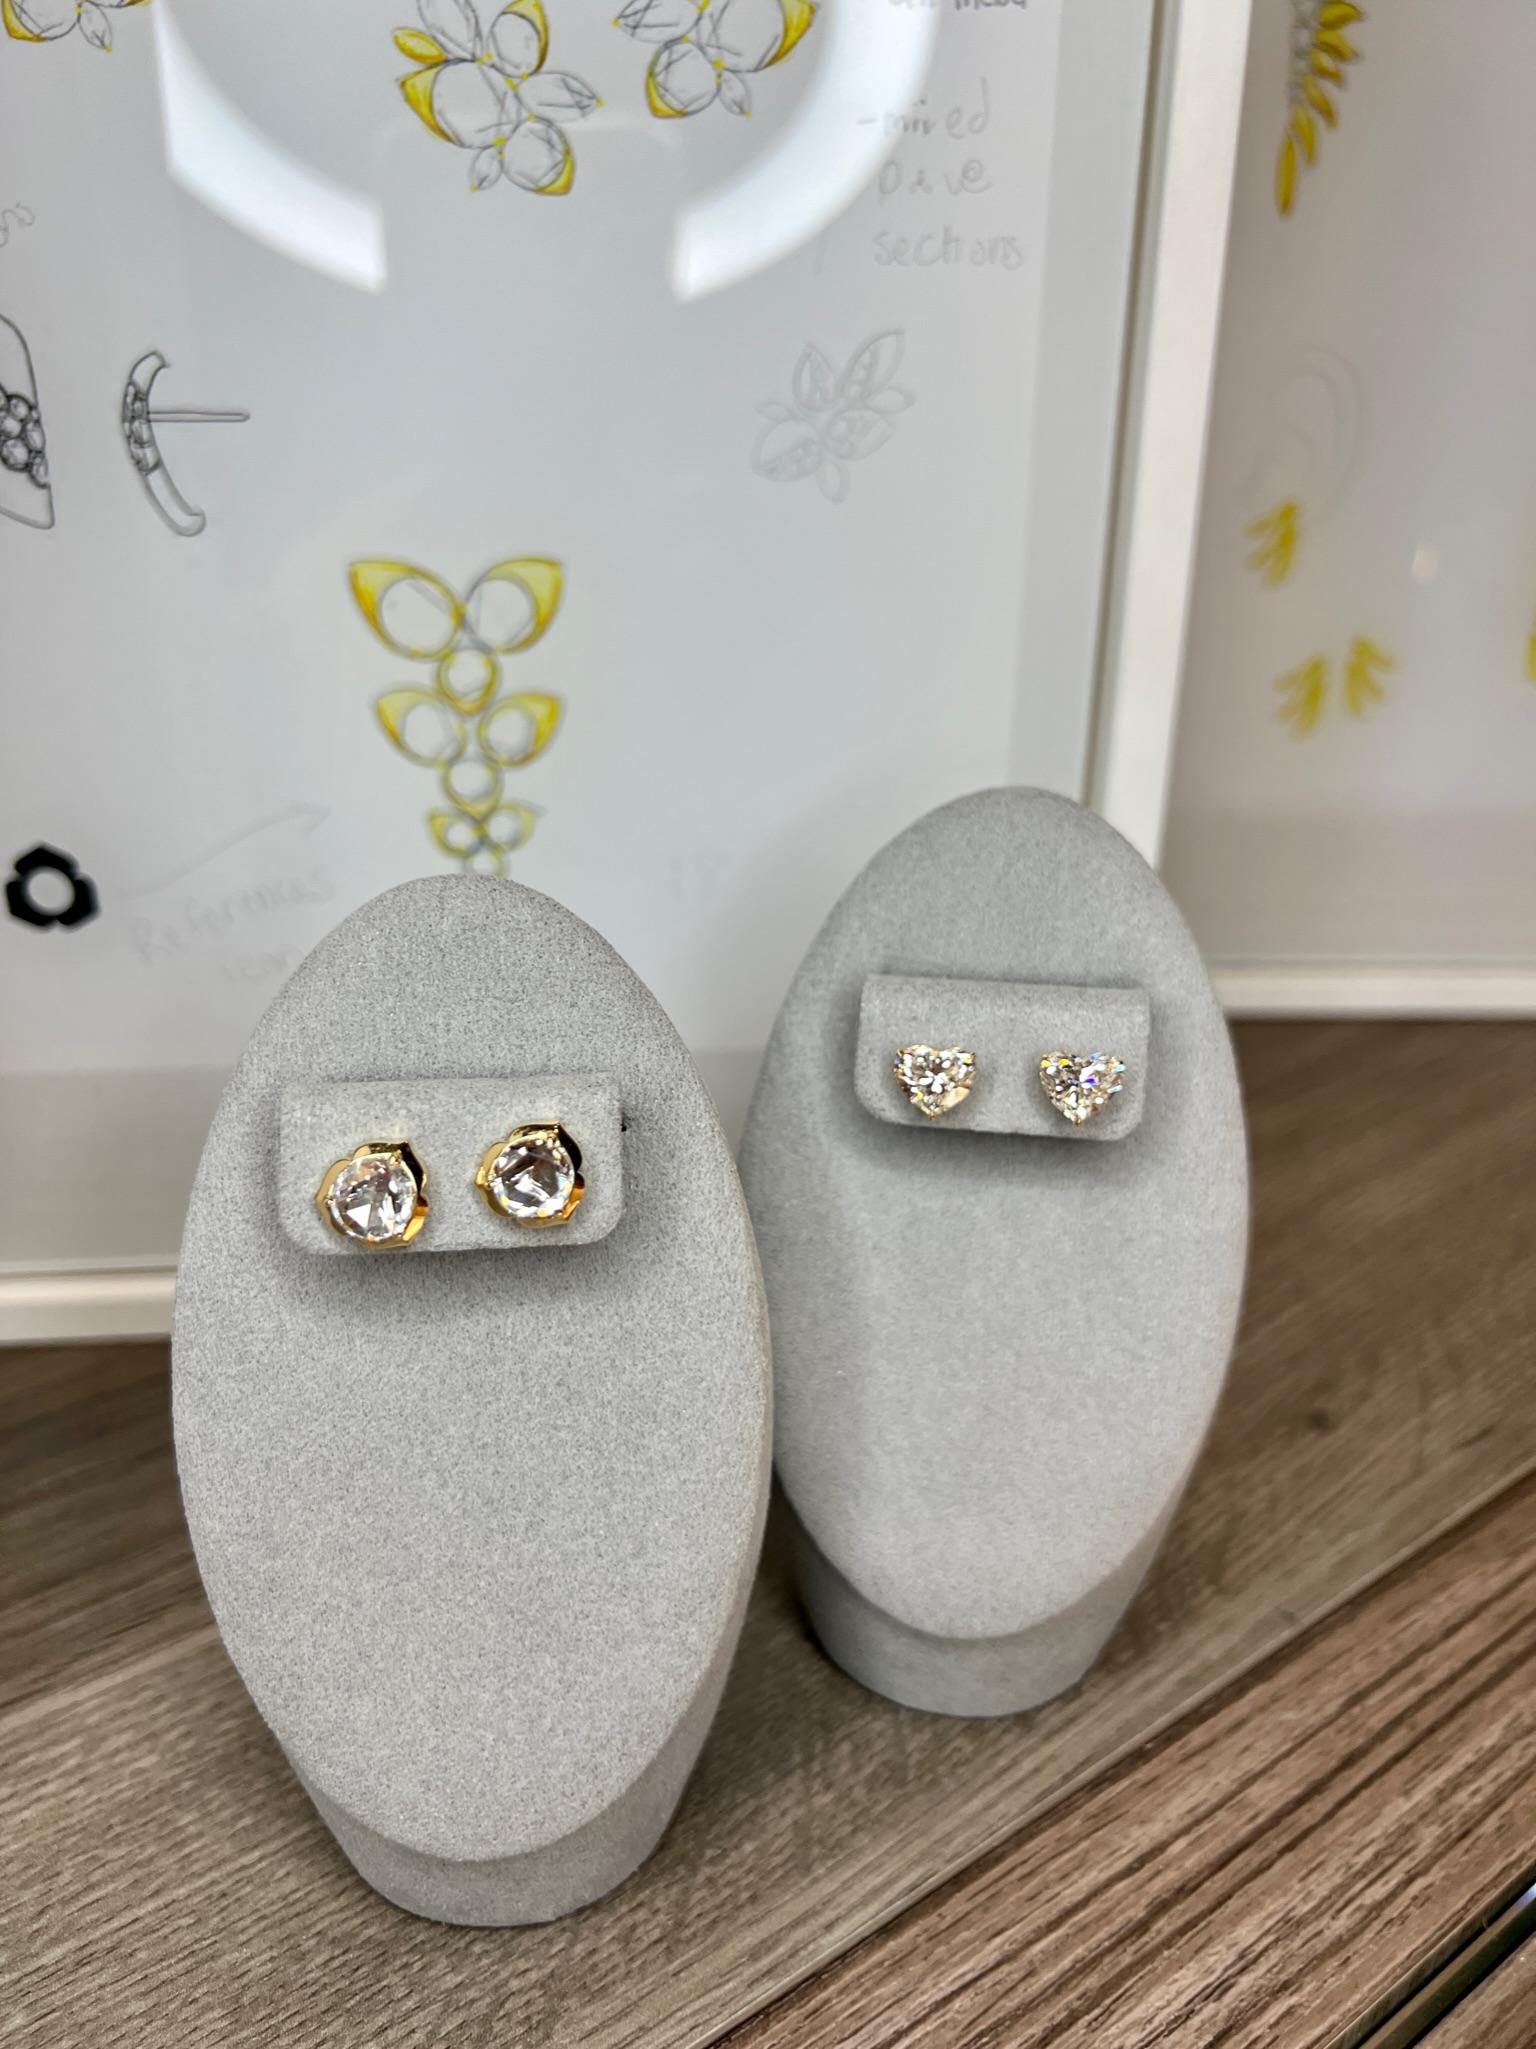 Rose Cut Ammrada Signature 2.27 carat Diamond Stud Earrings For Sale